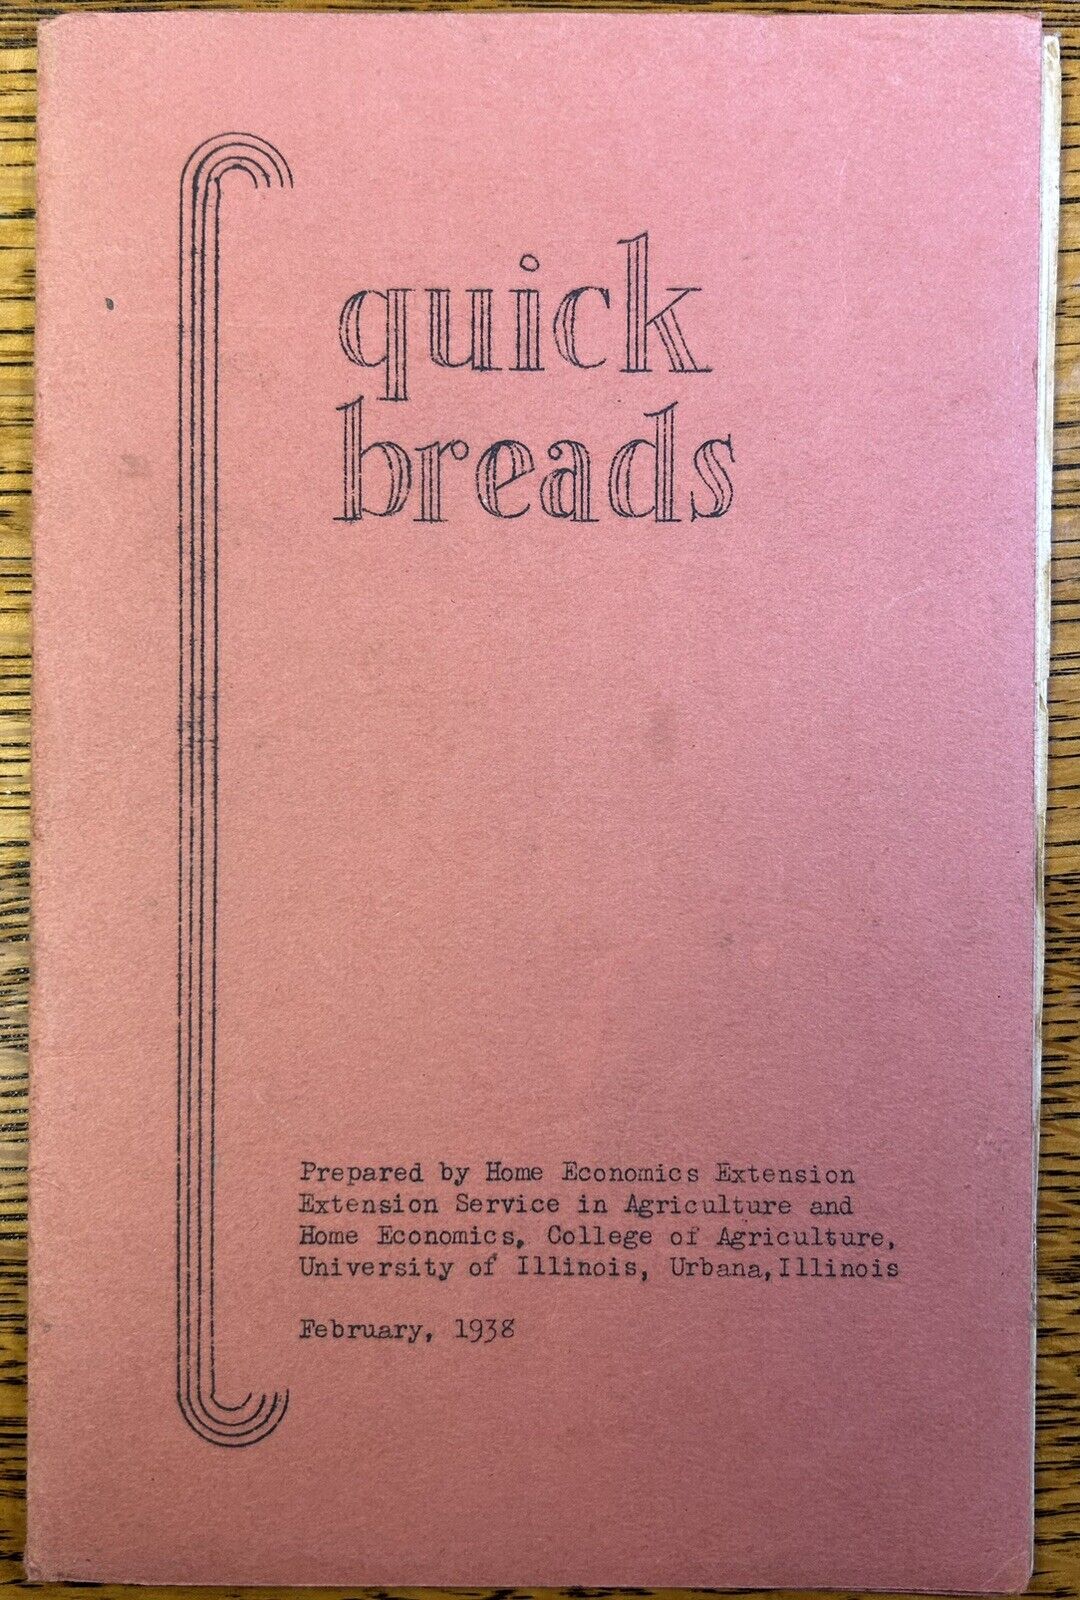 Quick Breads 1938 University of Illinois Home Economics Baking Booklet